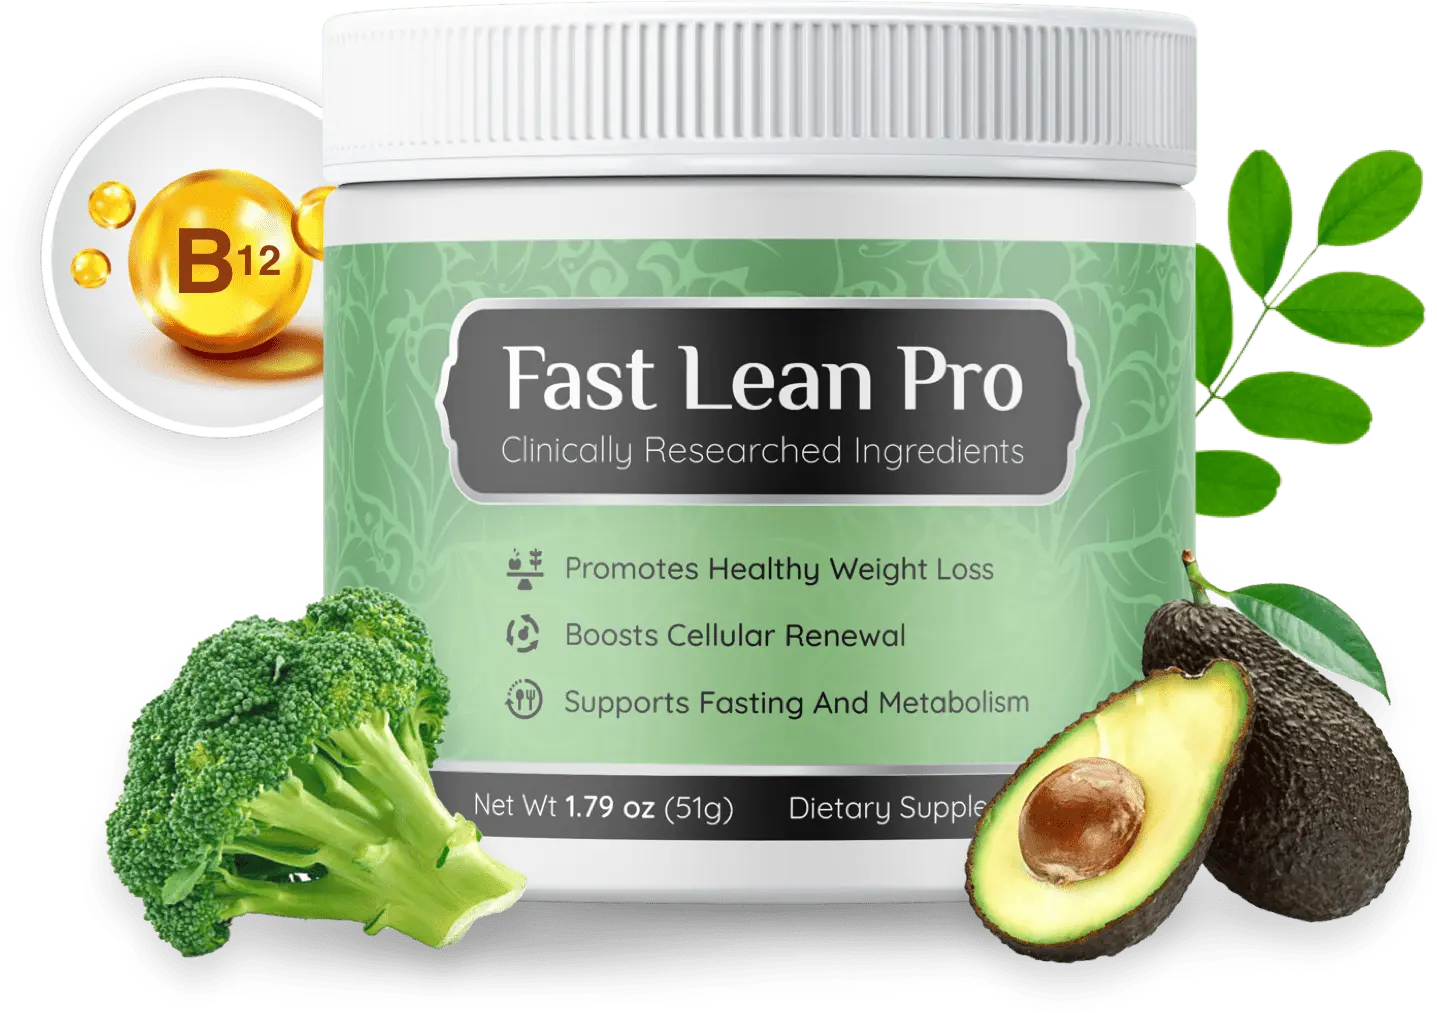 fast lean pro benefits